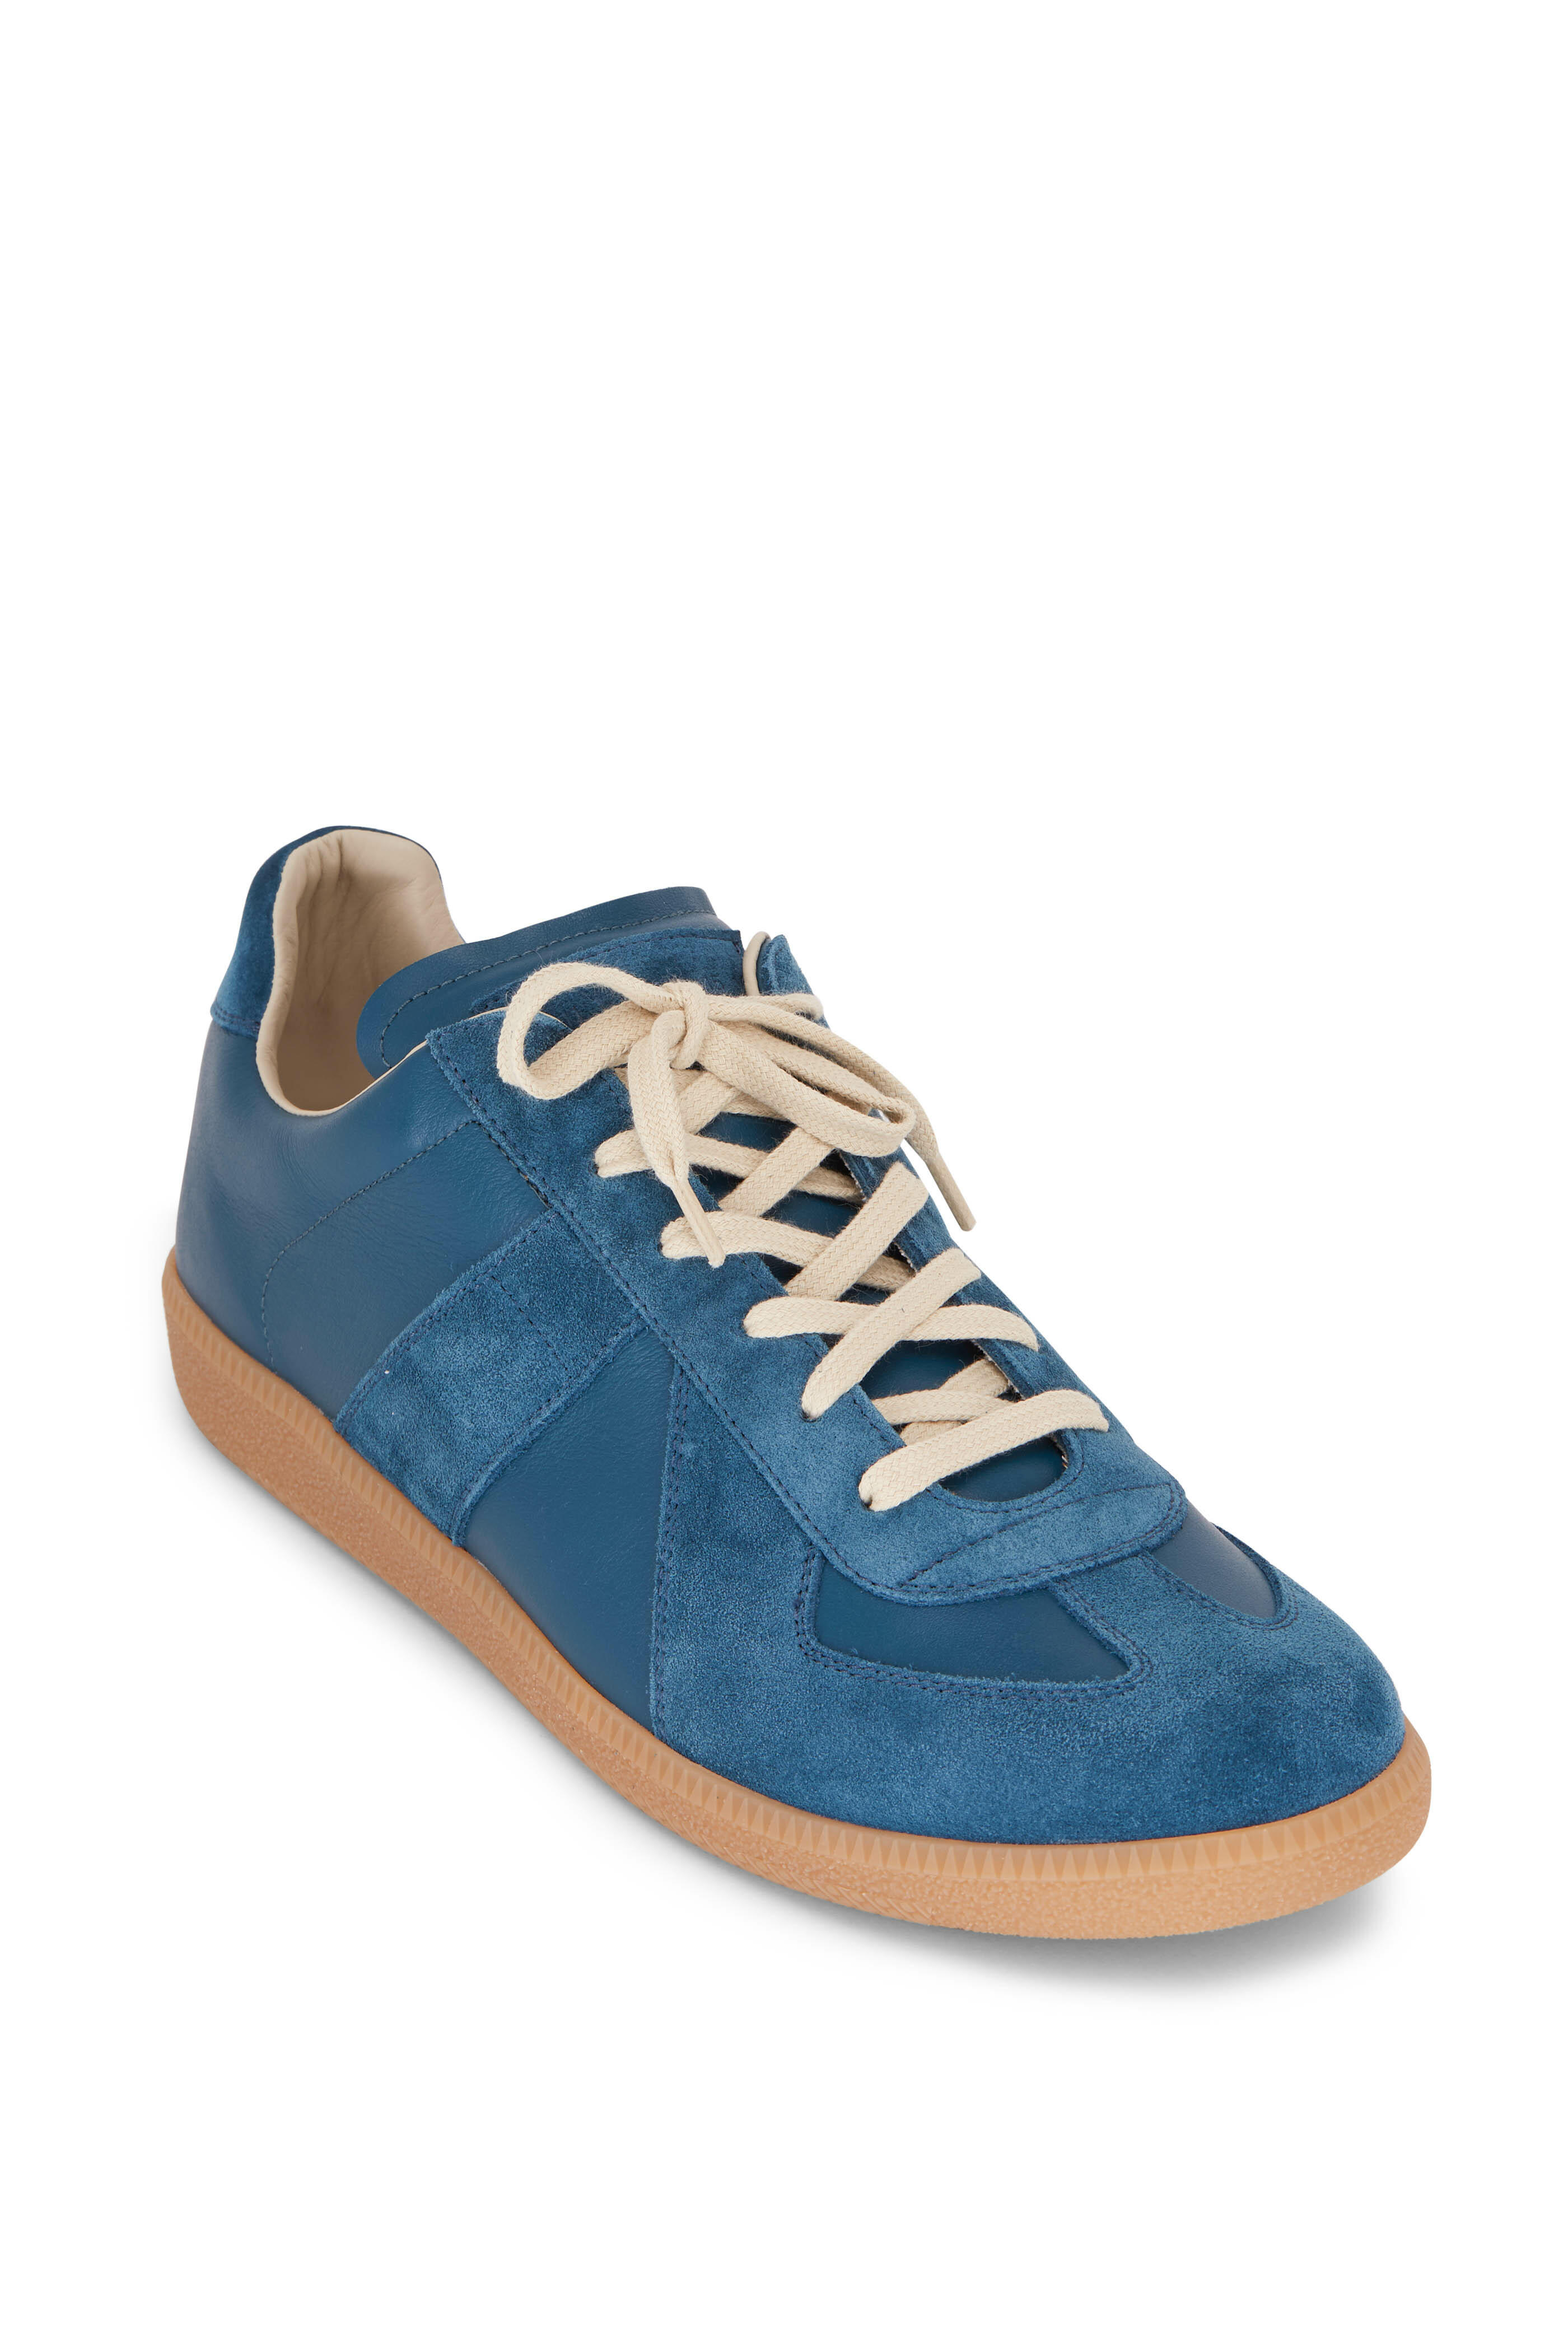 Maison Margiela - Replica Teal Leather & Suede Sneaker